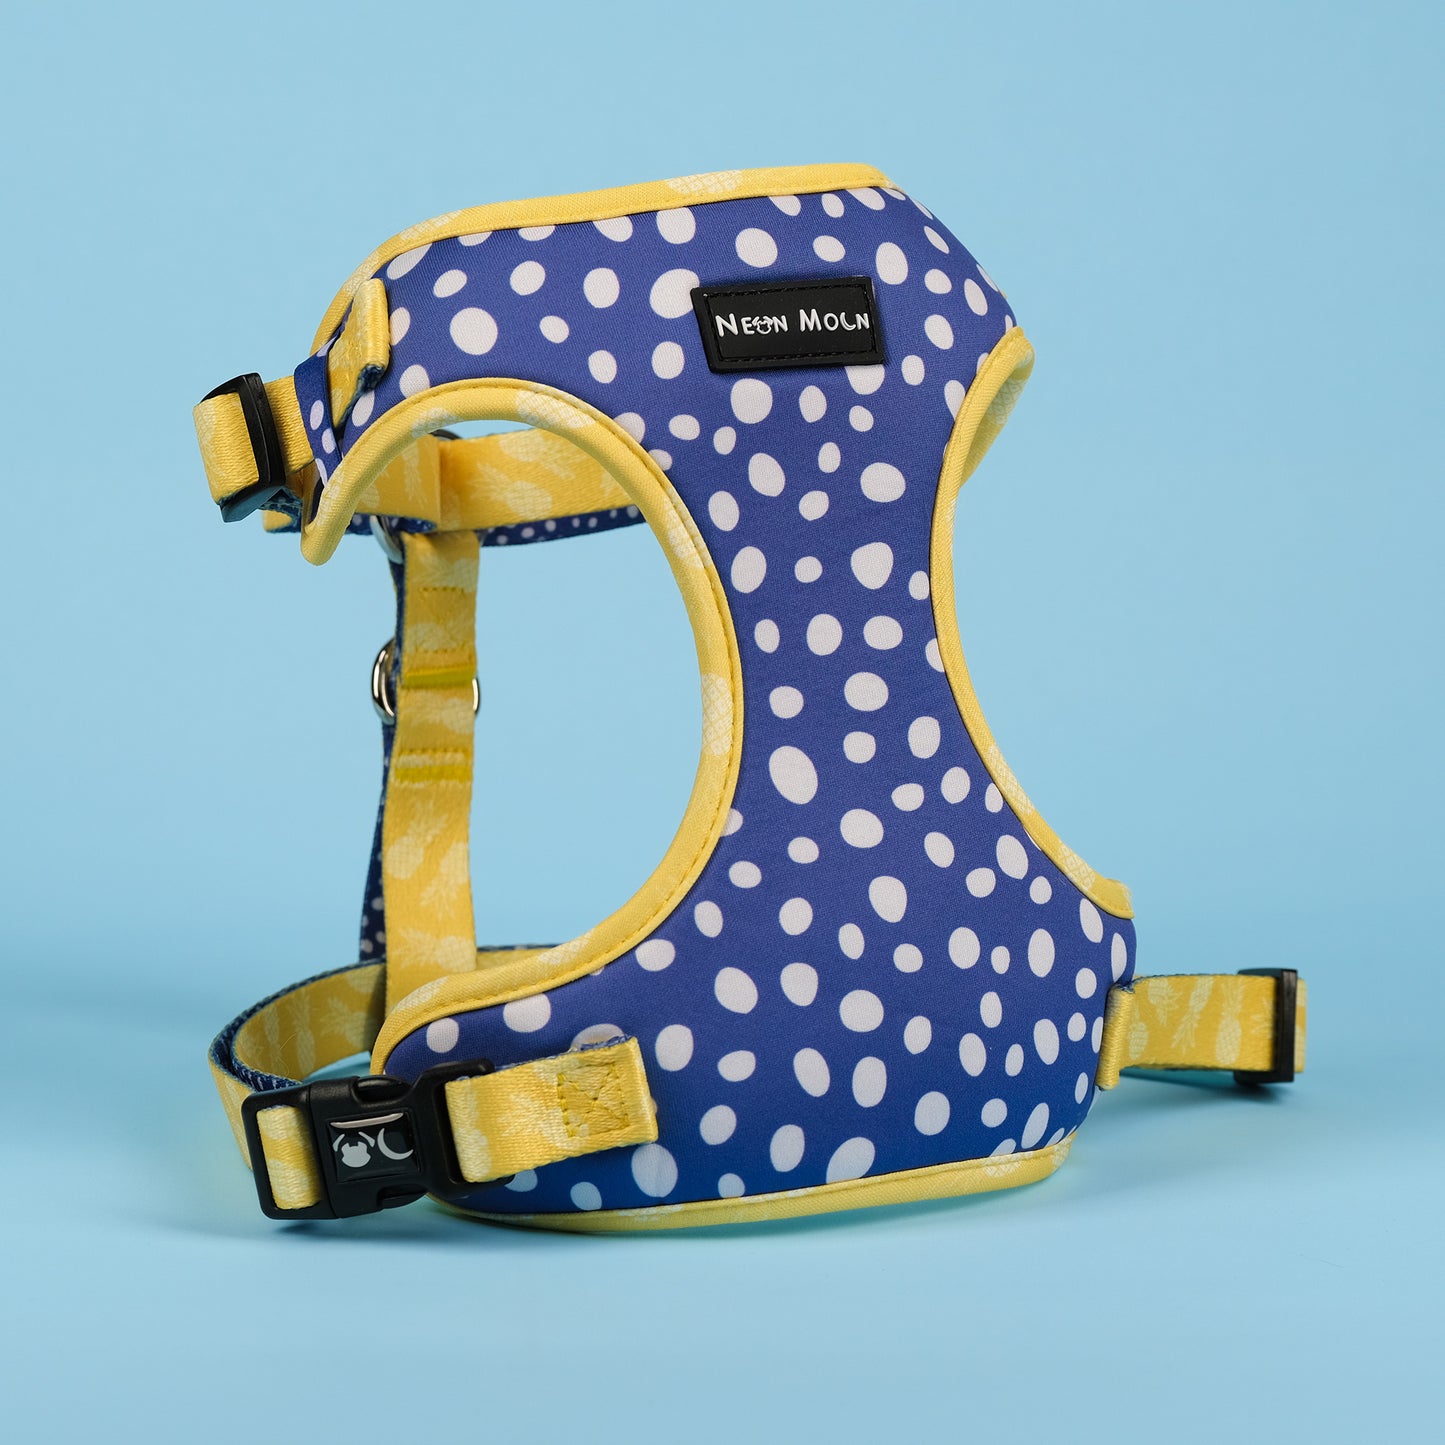 The Minnie mesh adjustable neoprene harness polka dot blue size large